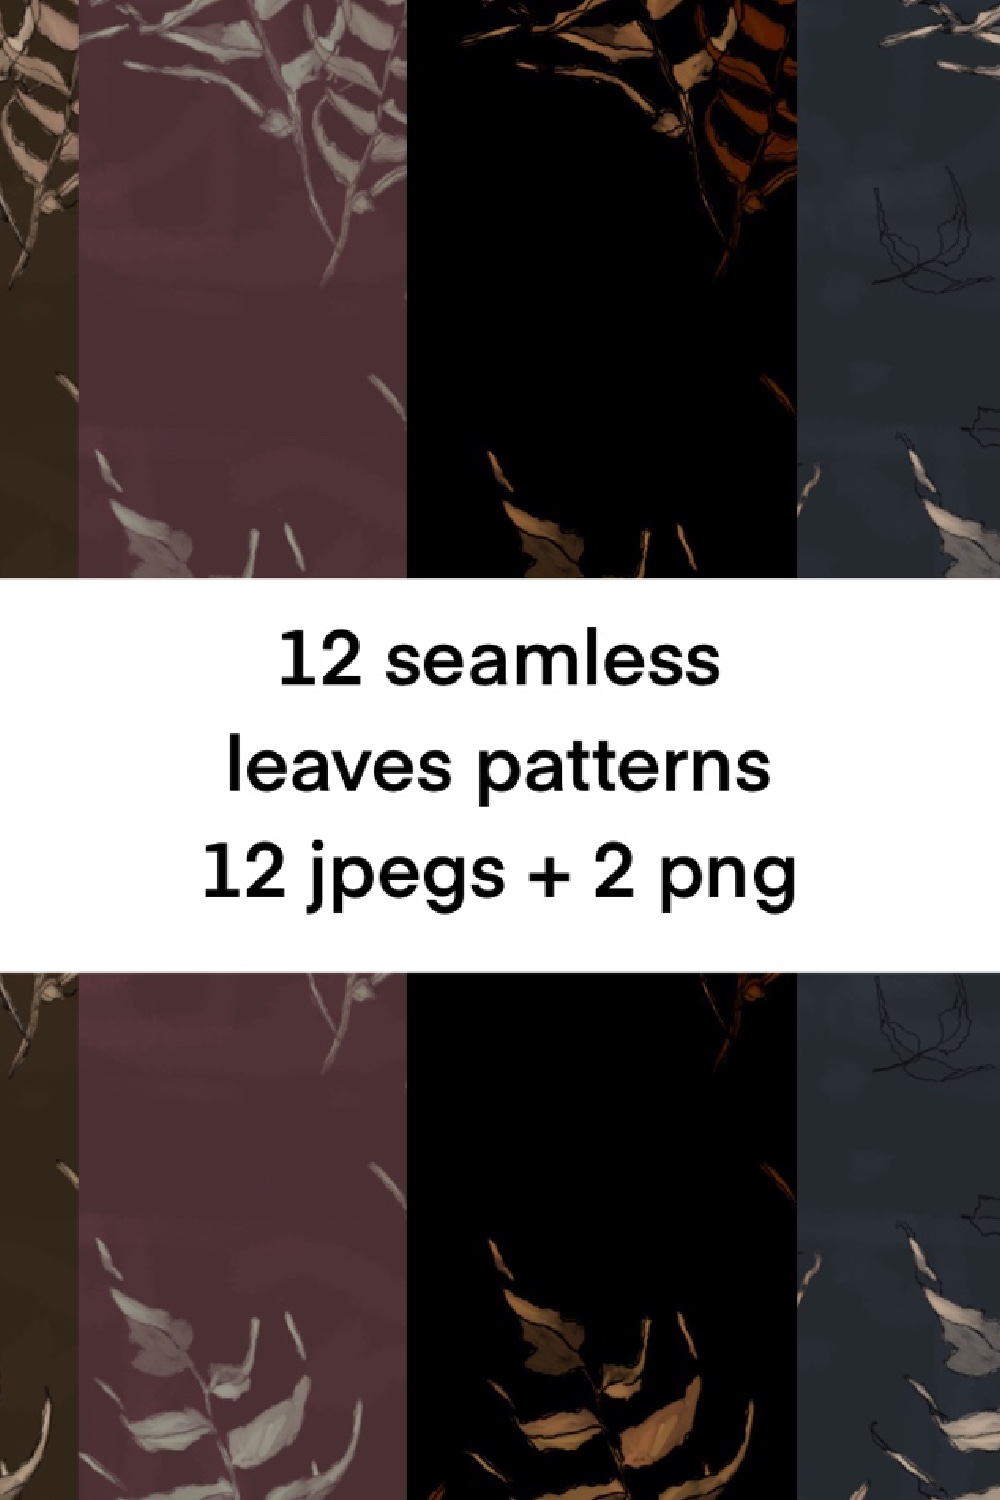 12 Seamless Leaves Patterns pinterest image.